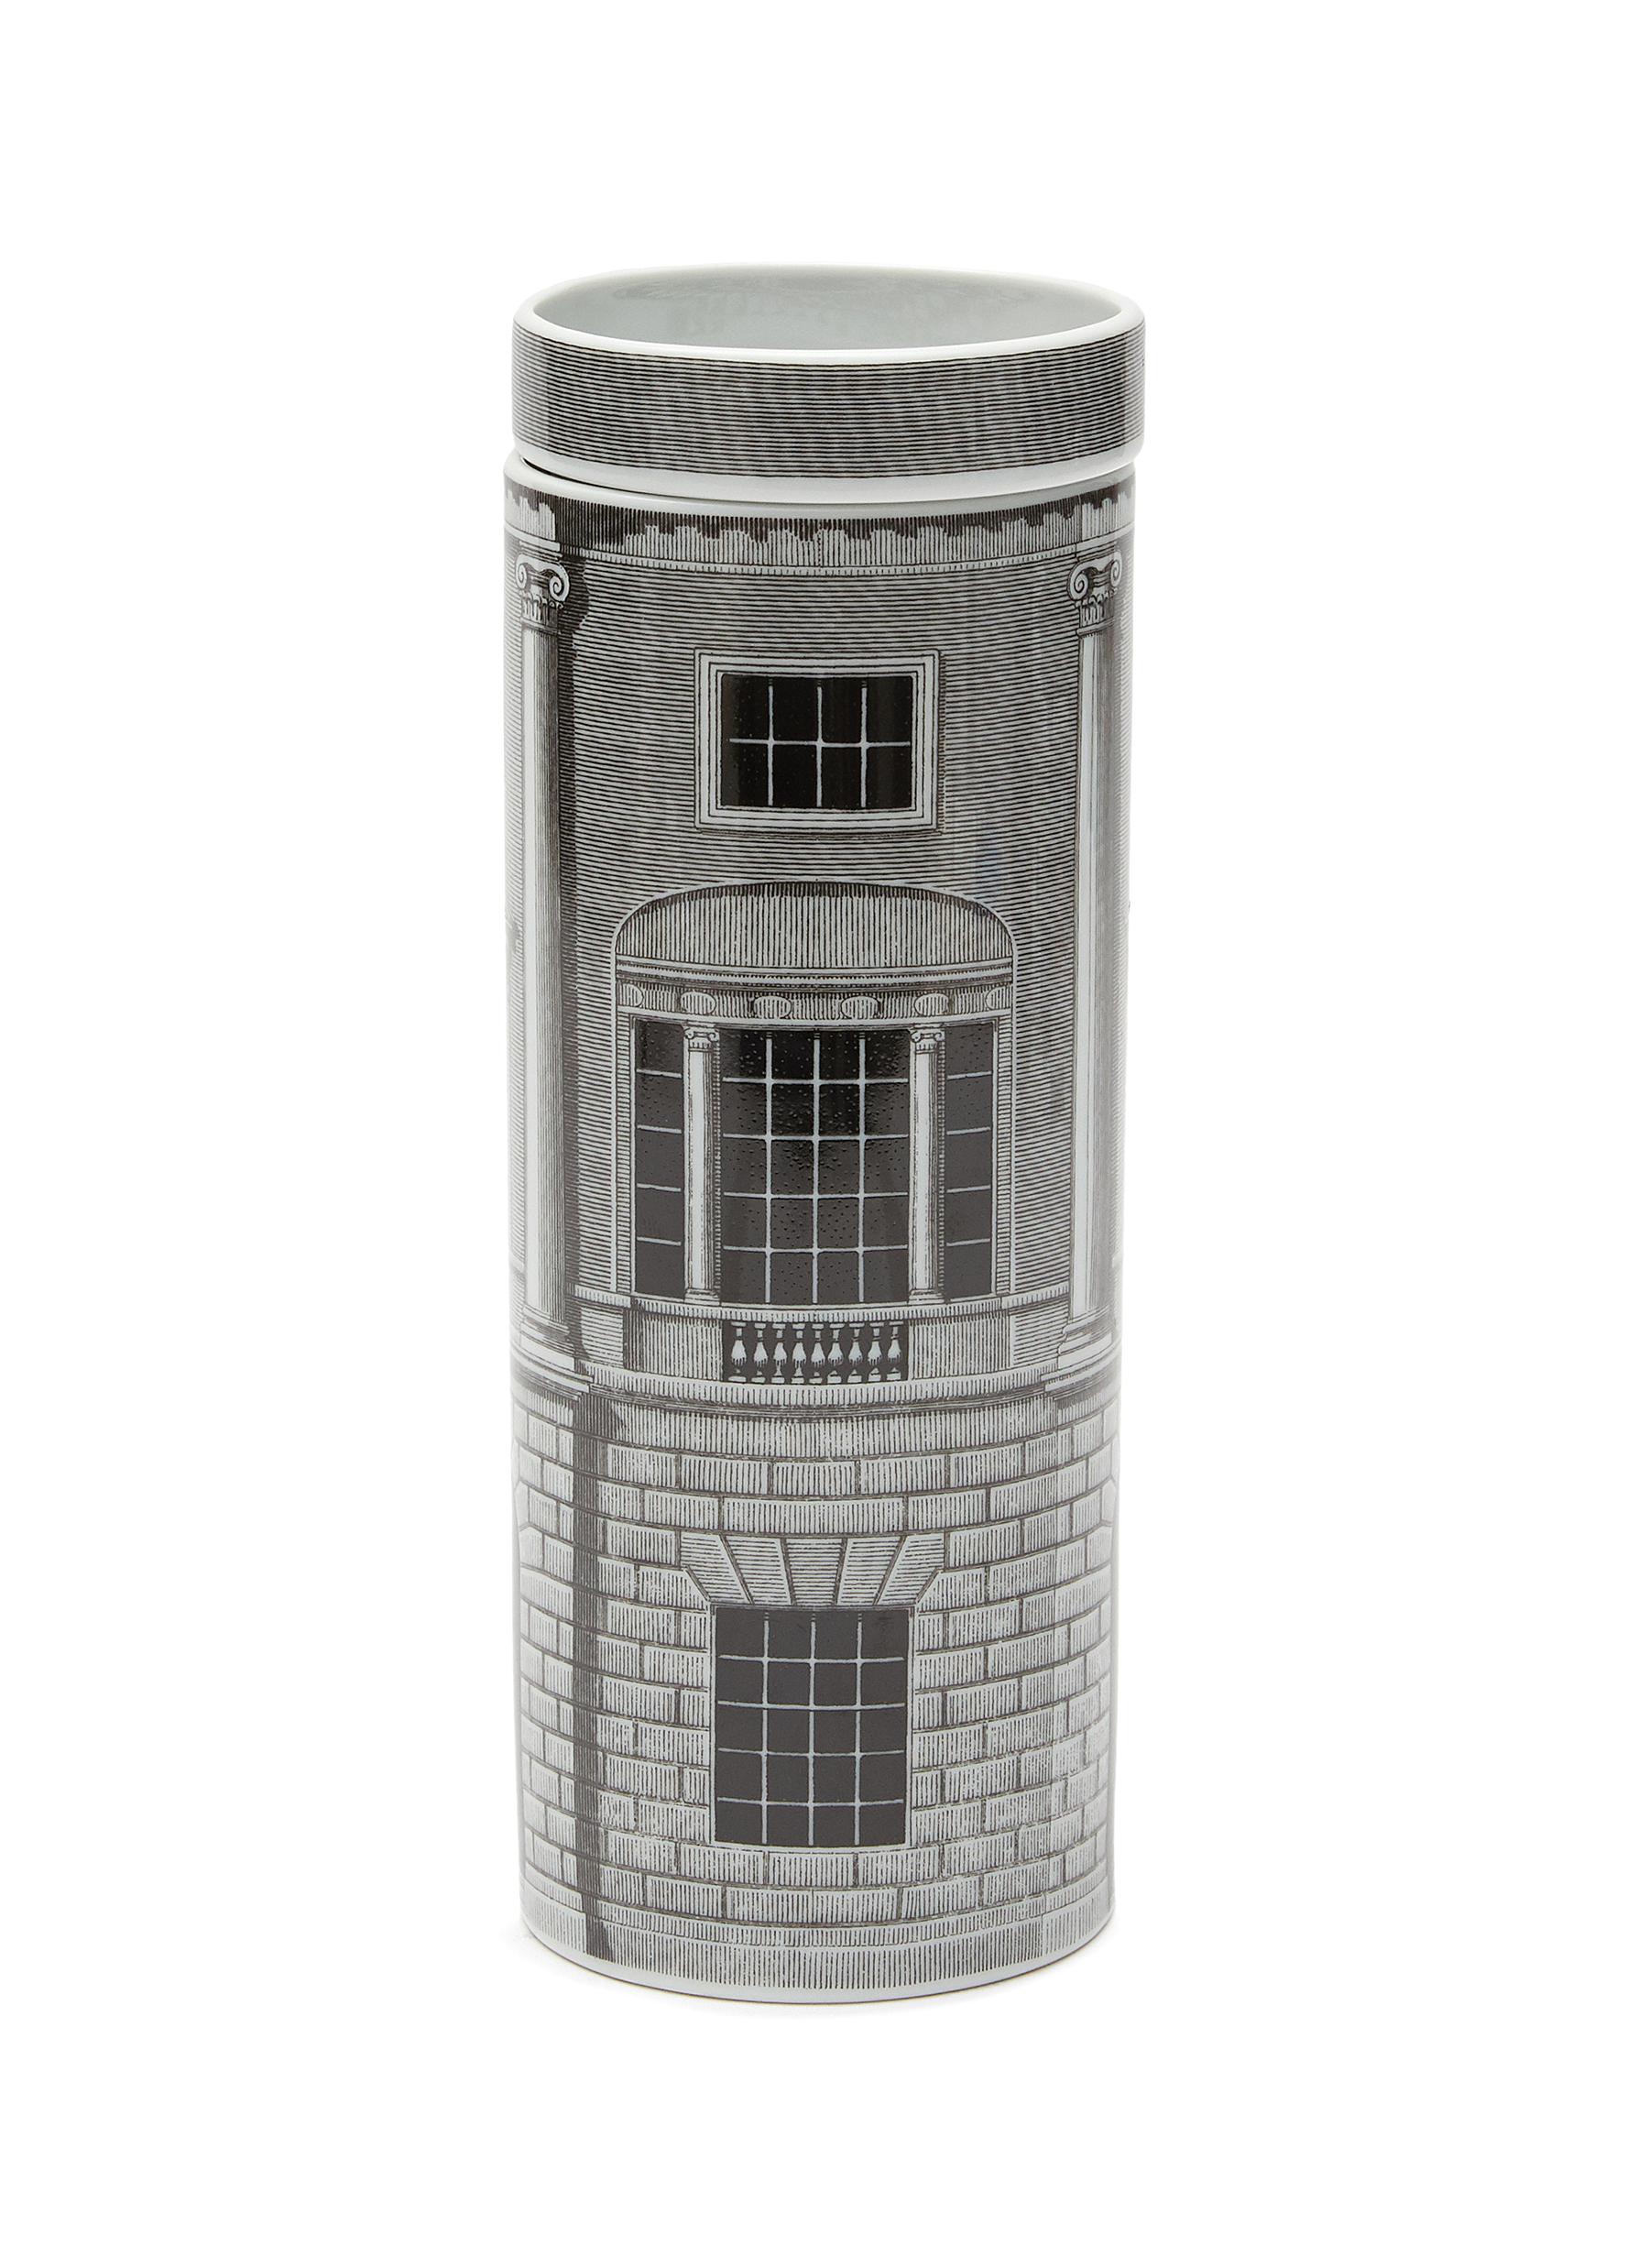 Décor Architettura Tower Graphic Immaginazione Scented Candle 800g